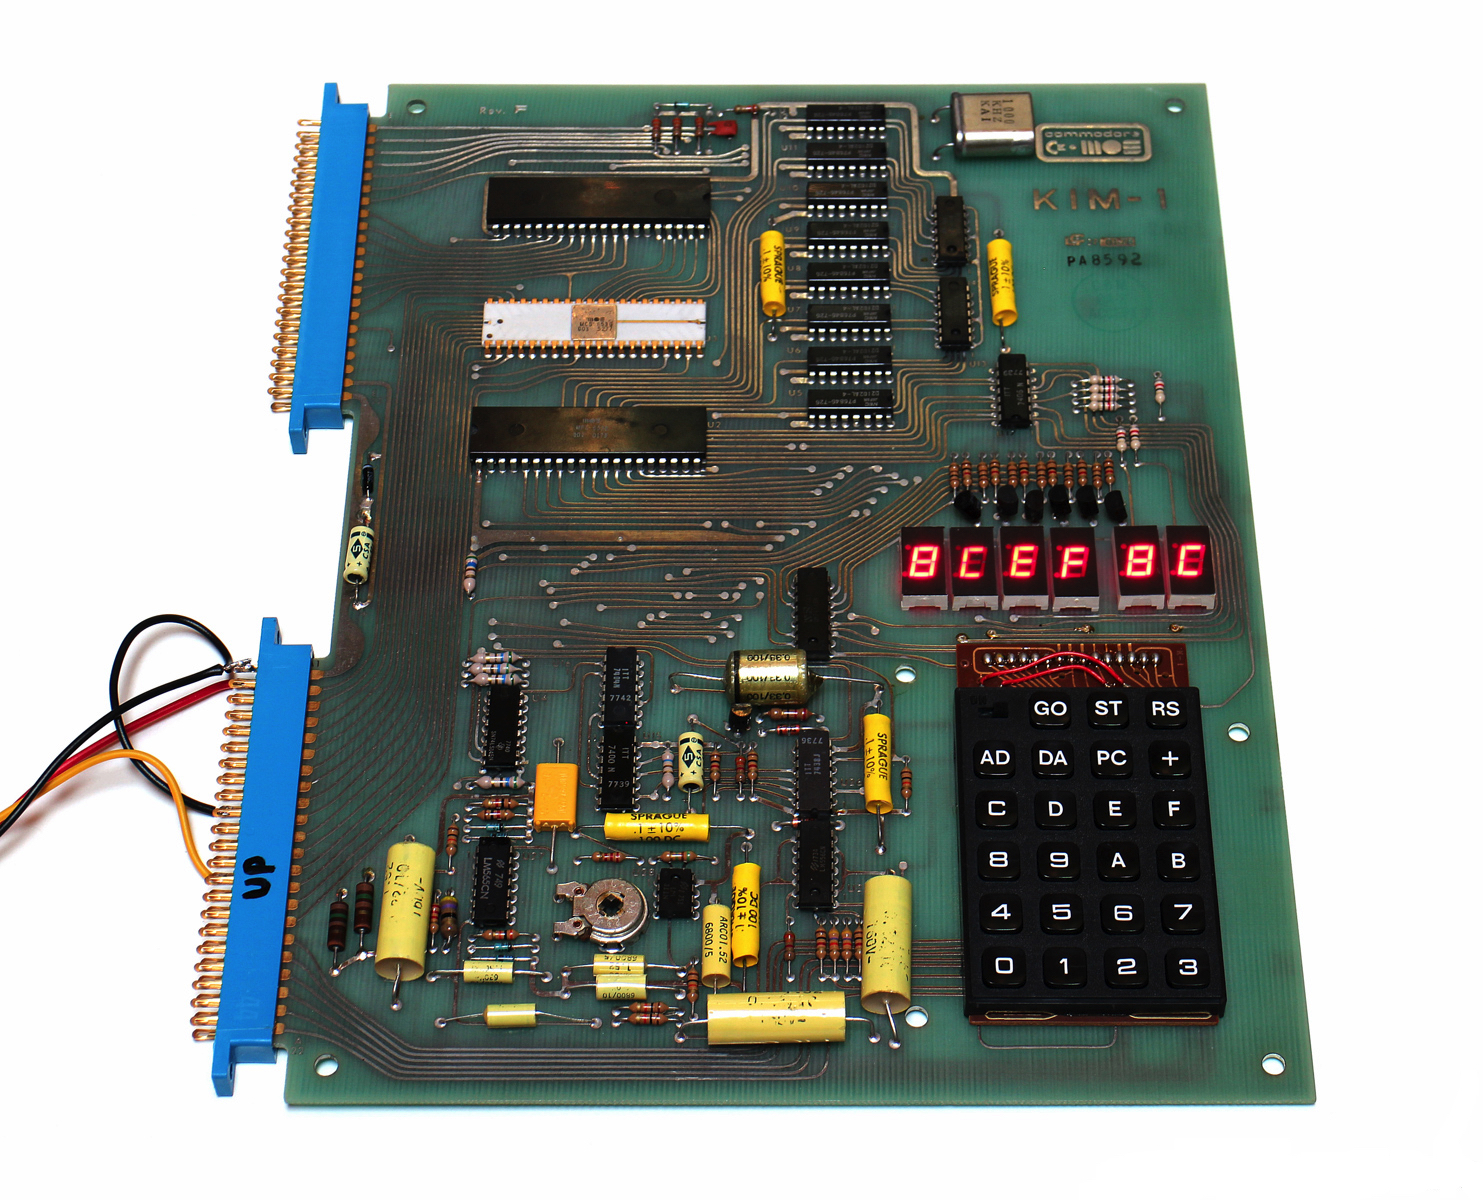 KIM-1, a single-board computer with a hexadecimal keypad and 6-digit LED display.